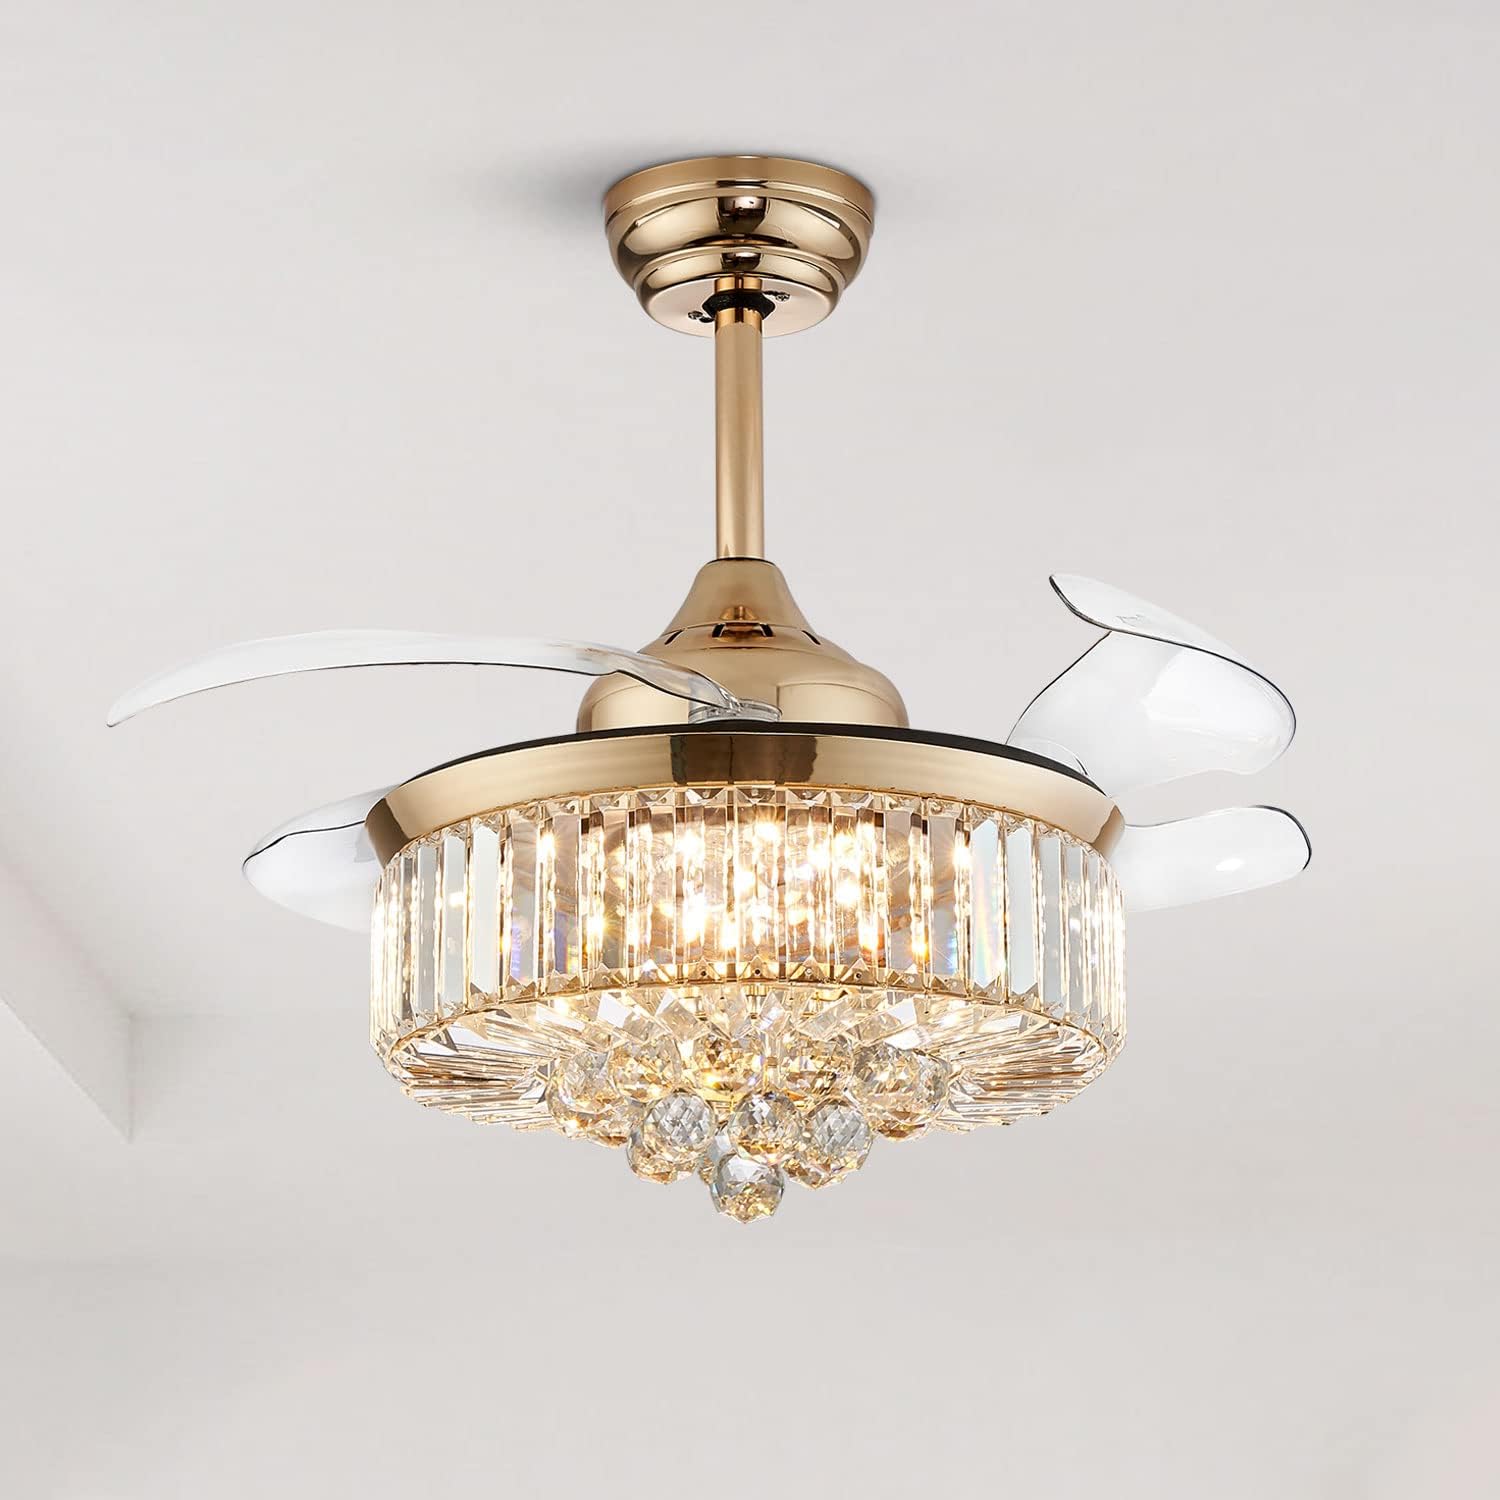 Siljoy 36 Inch Fandelier, Chandelier Fan with Light Remote Control, Crystal Ceiling Fan Gold Fandelier Ceiling Fans LED Dimmable for Bedroom Living Room